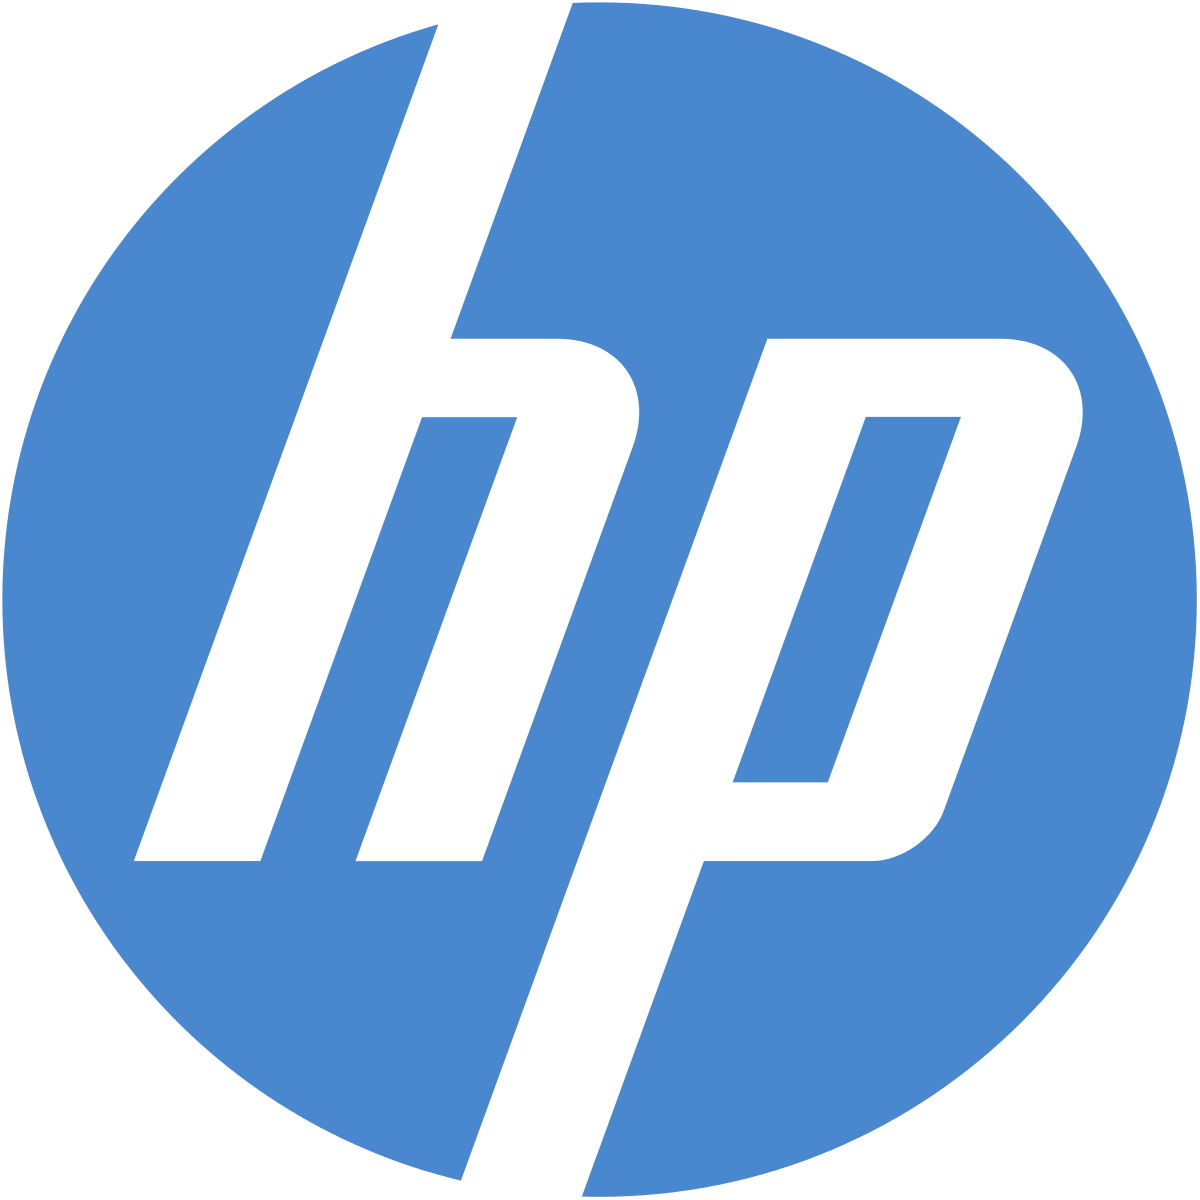 HP Store logo